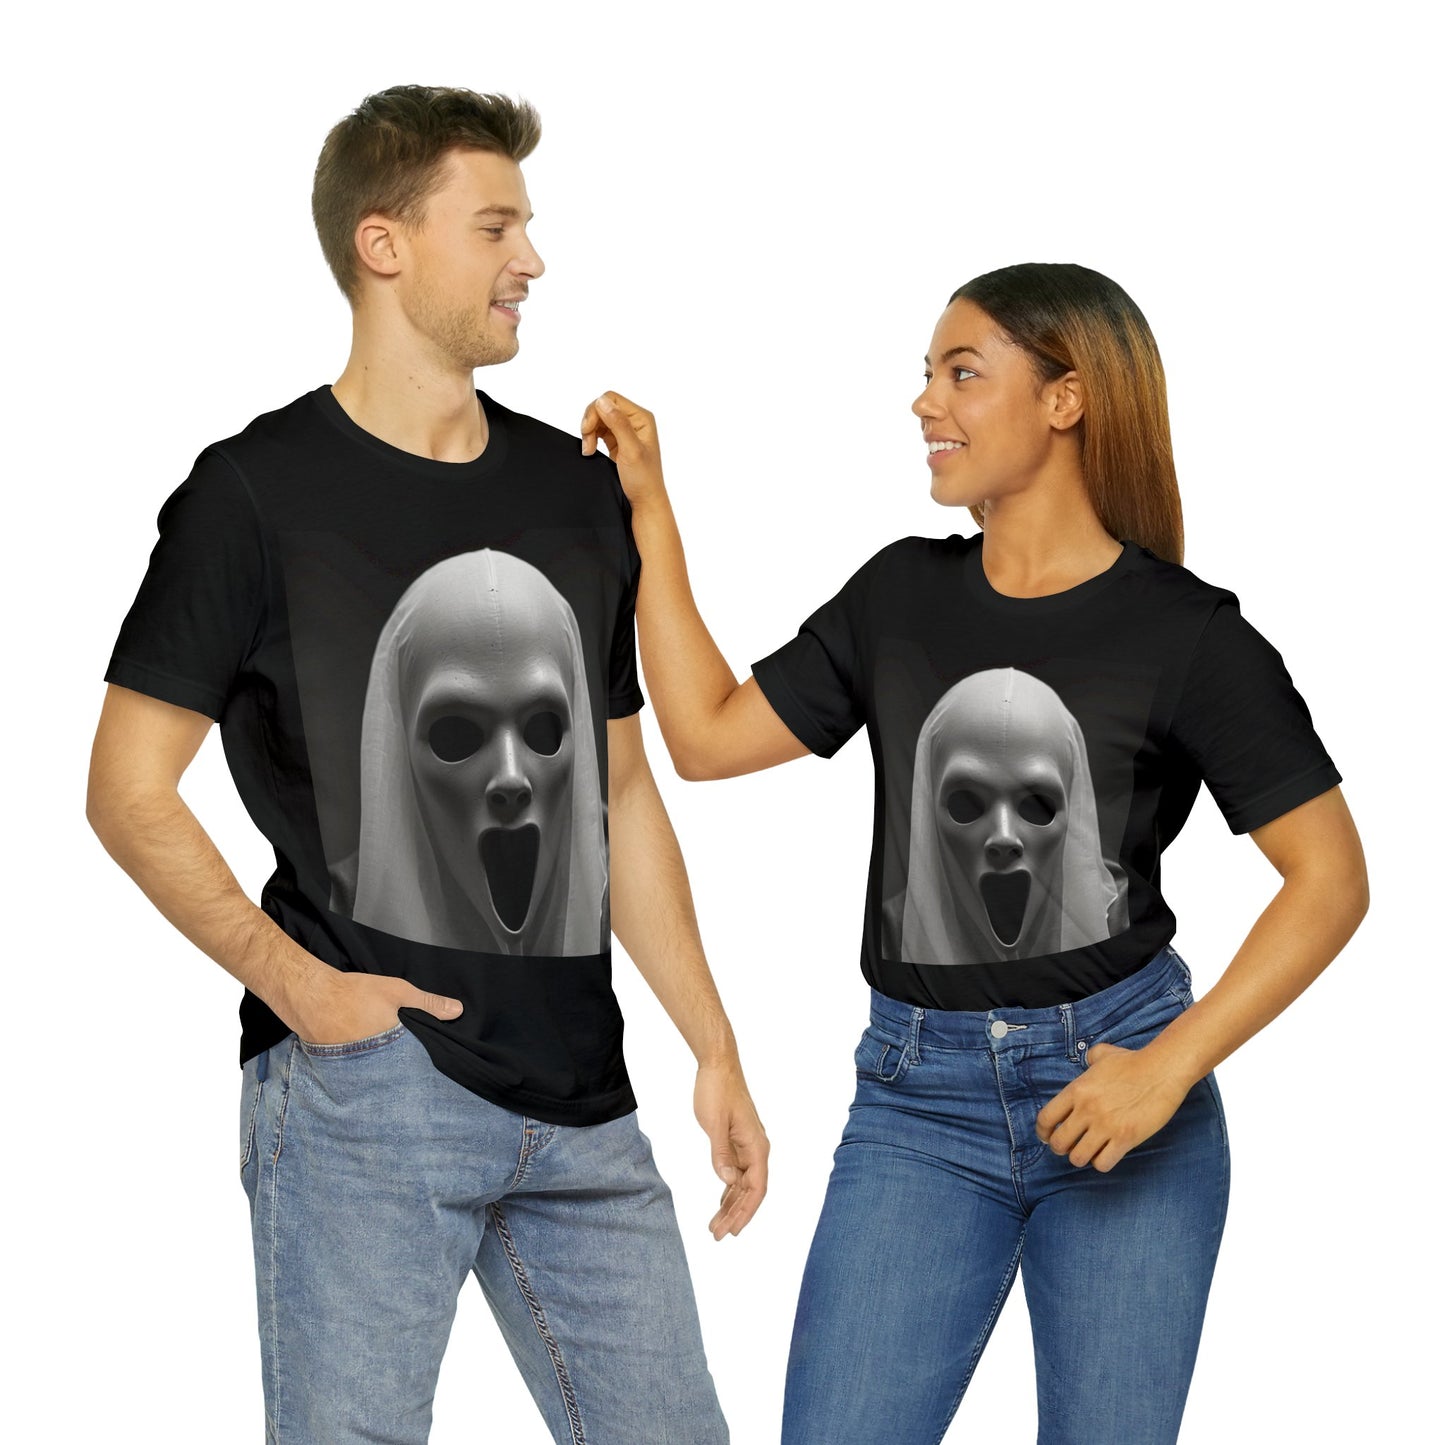 Death Mask | Creepy | HD Graphic | Horrorcore | Goth |  Unisex | Men's | Women's | Tee | T-Shirt